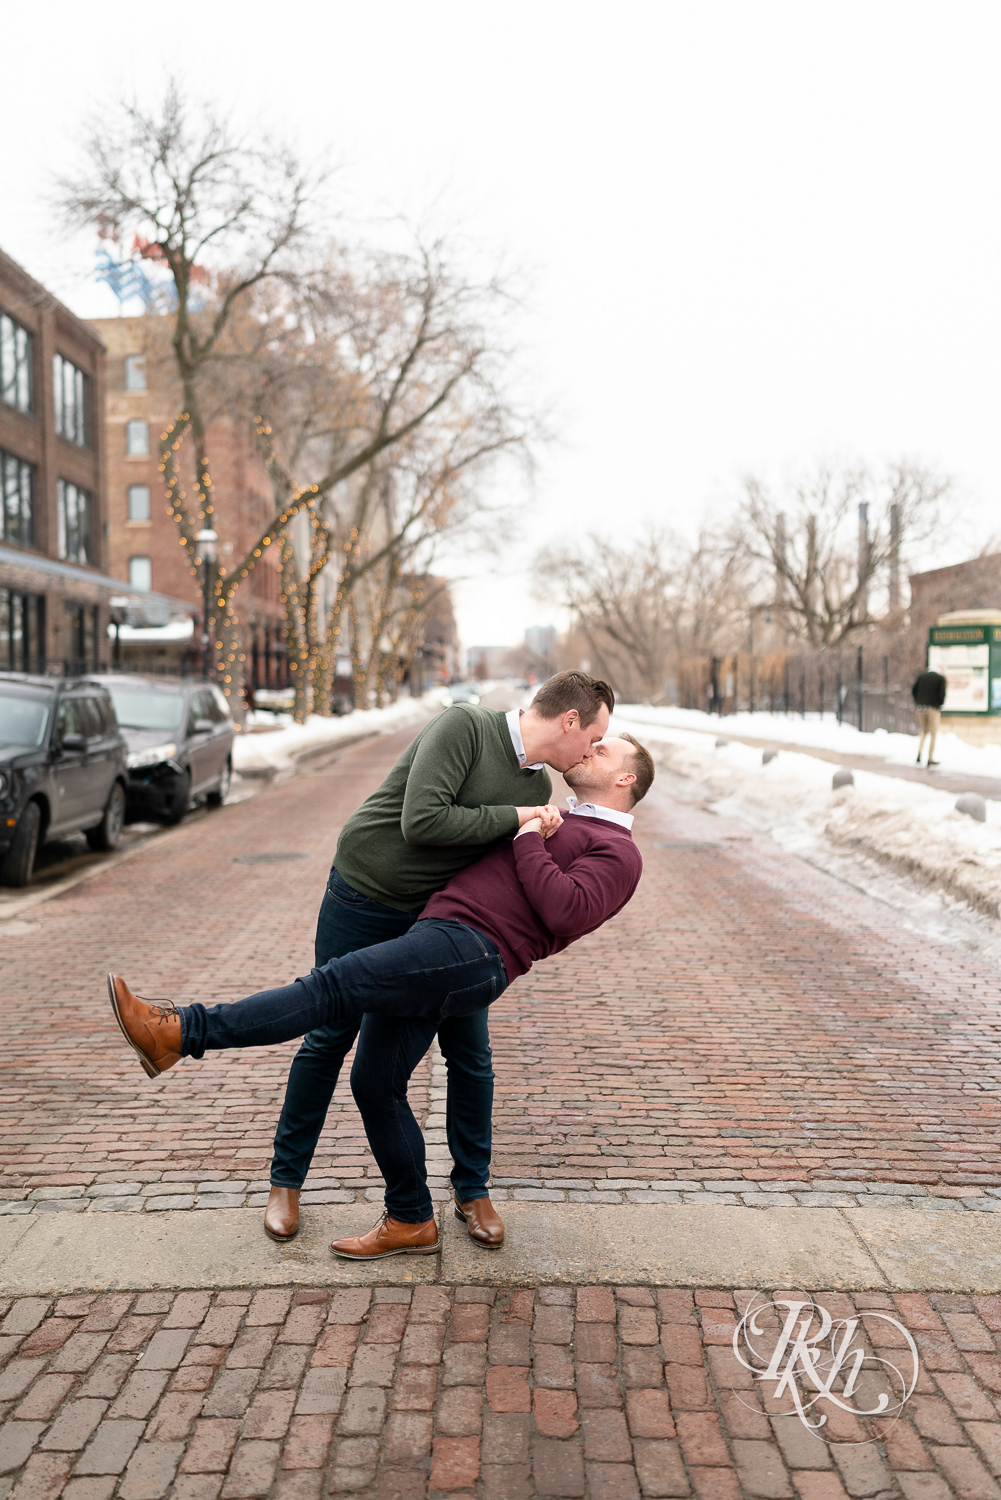 Gay men kiss on cobblestone street during the winter in Minneapolis, Minnesota.